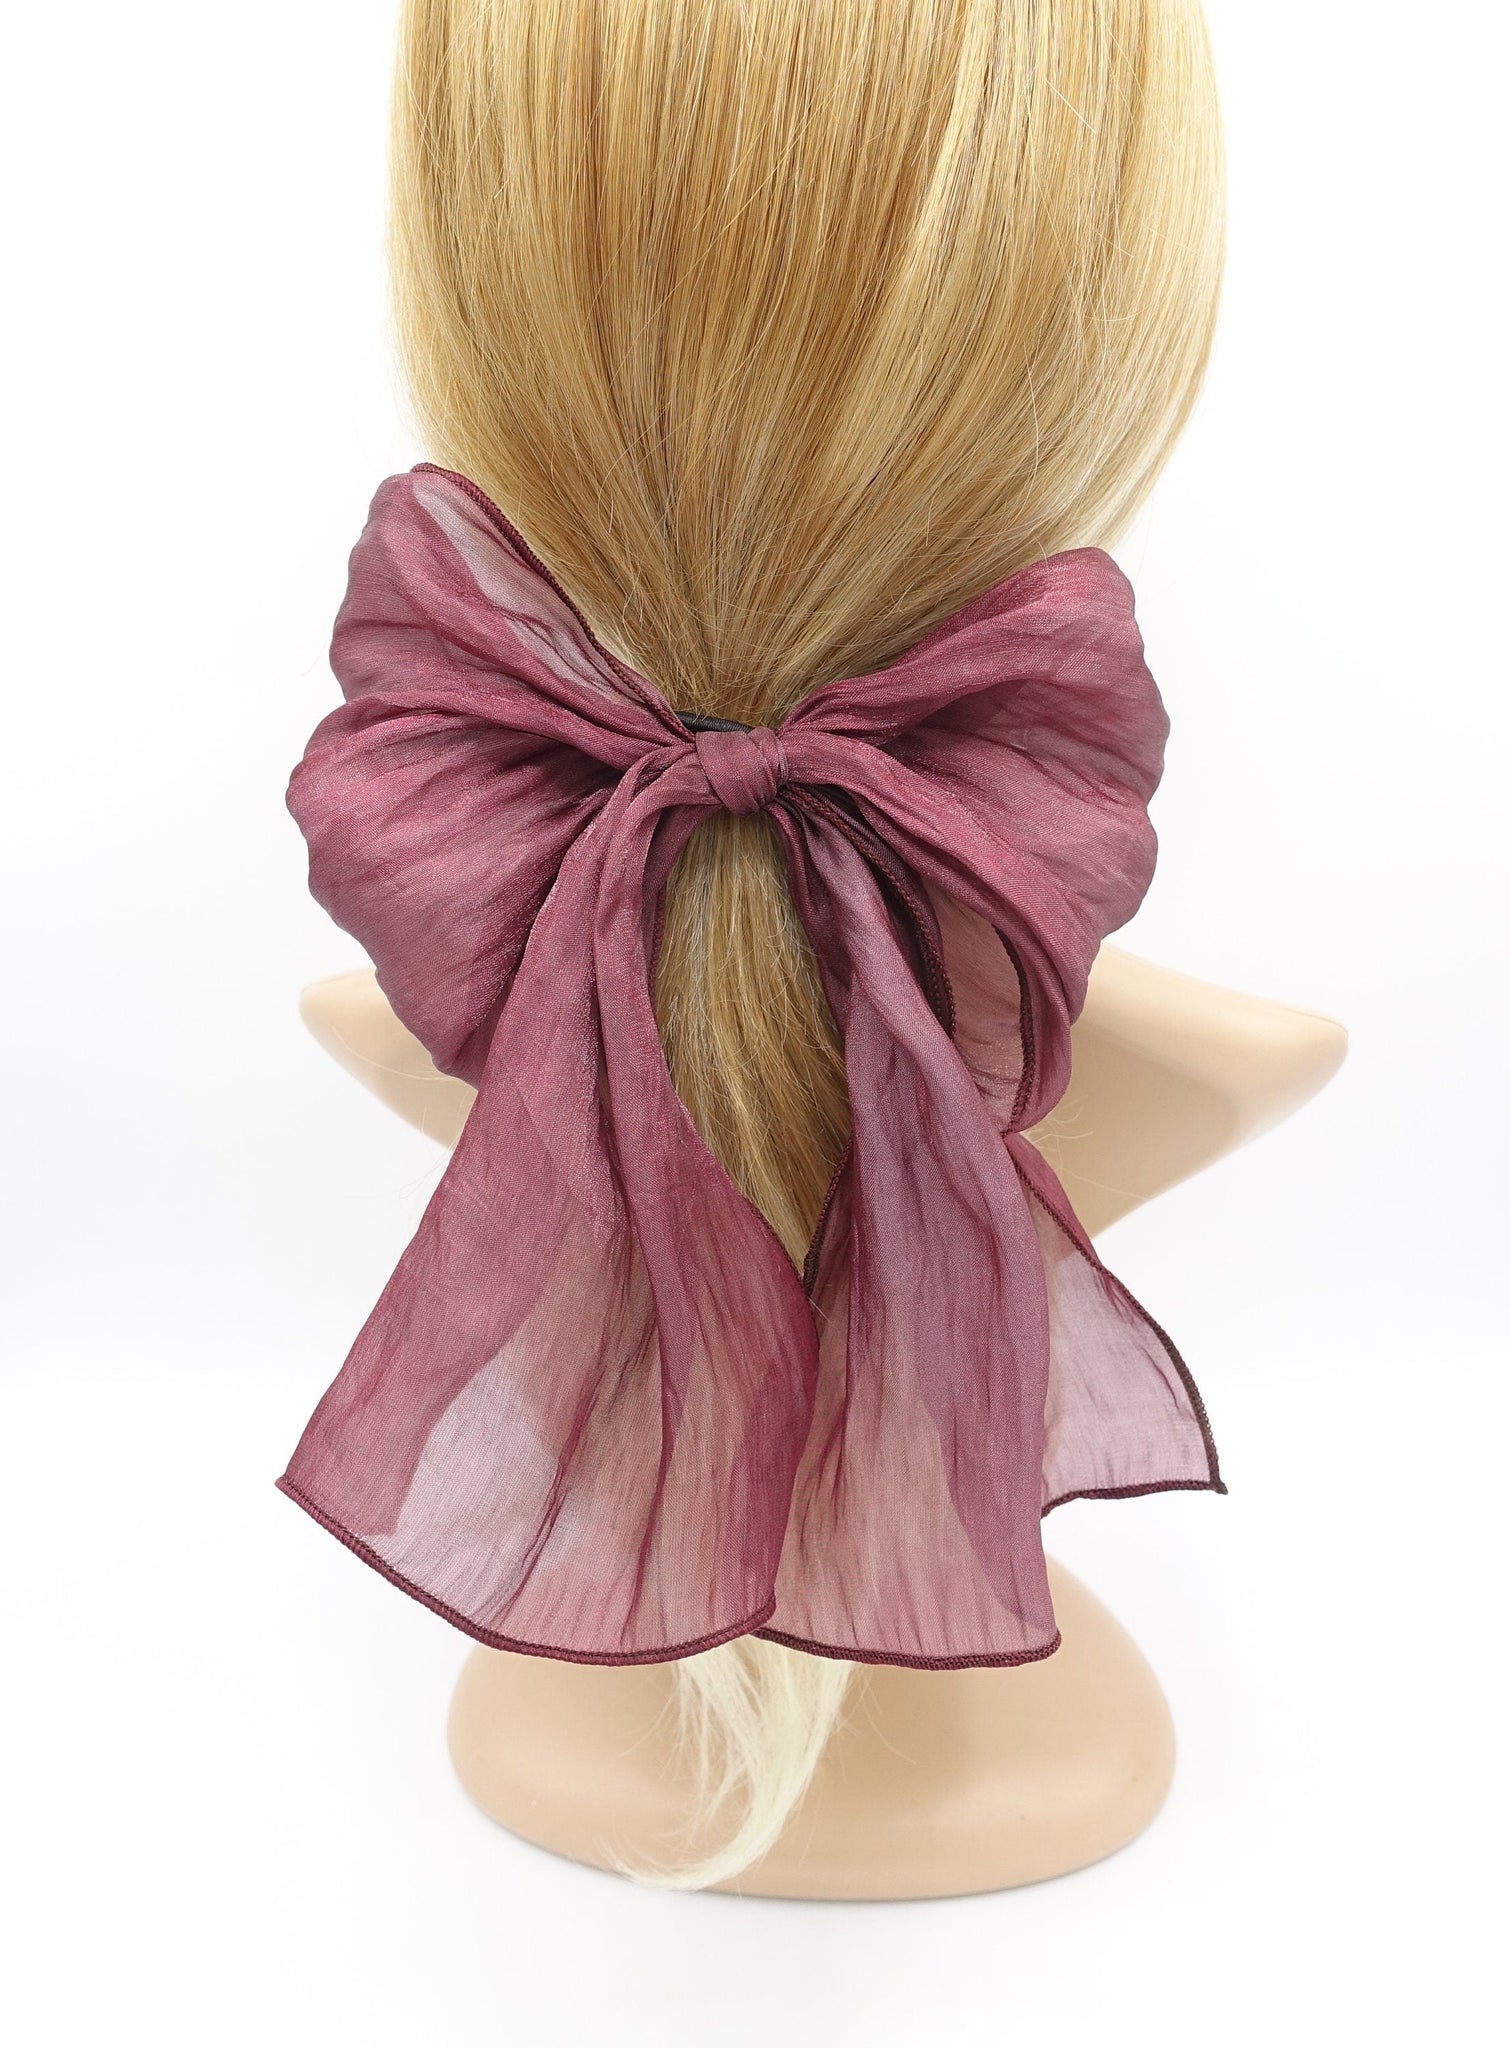 veryshine.com Ponytail holders Red wine linen glam hair bows elastic hair tie ponytail holder